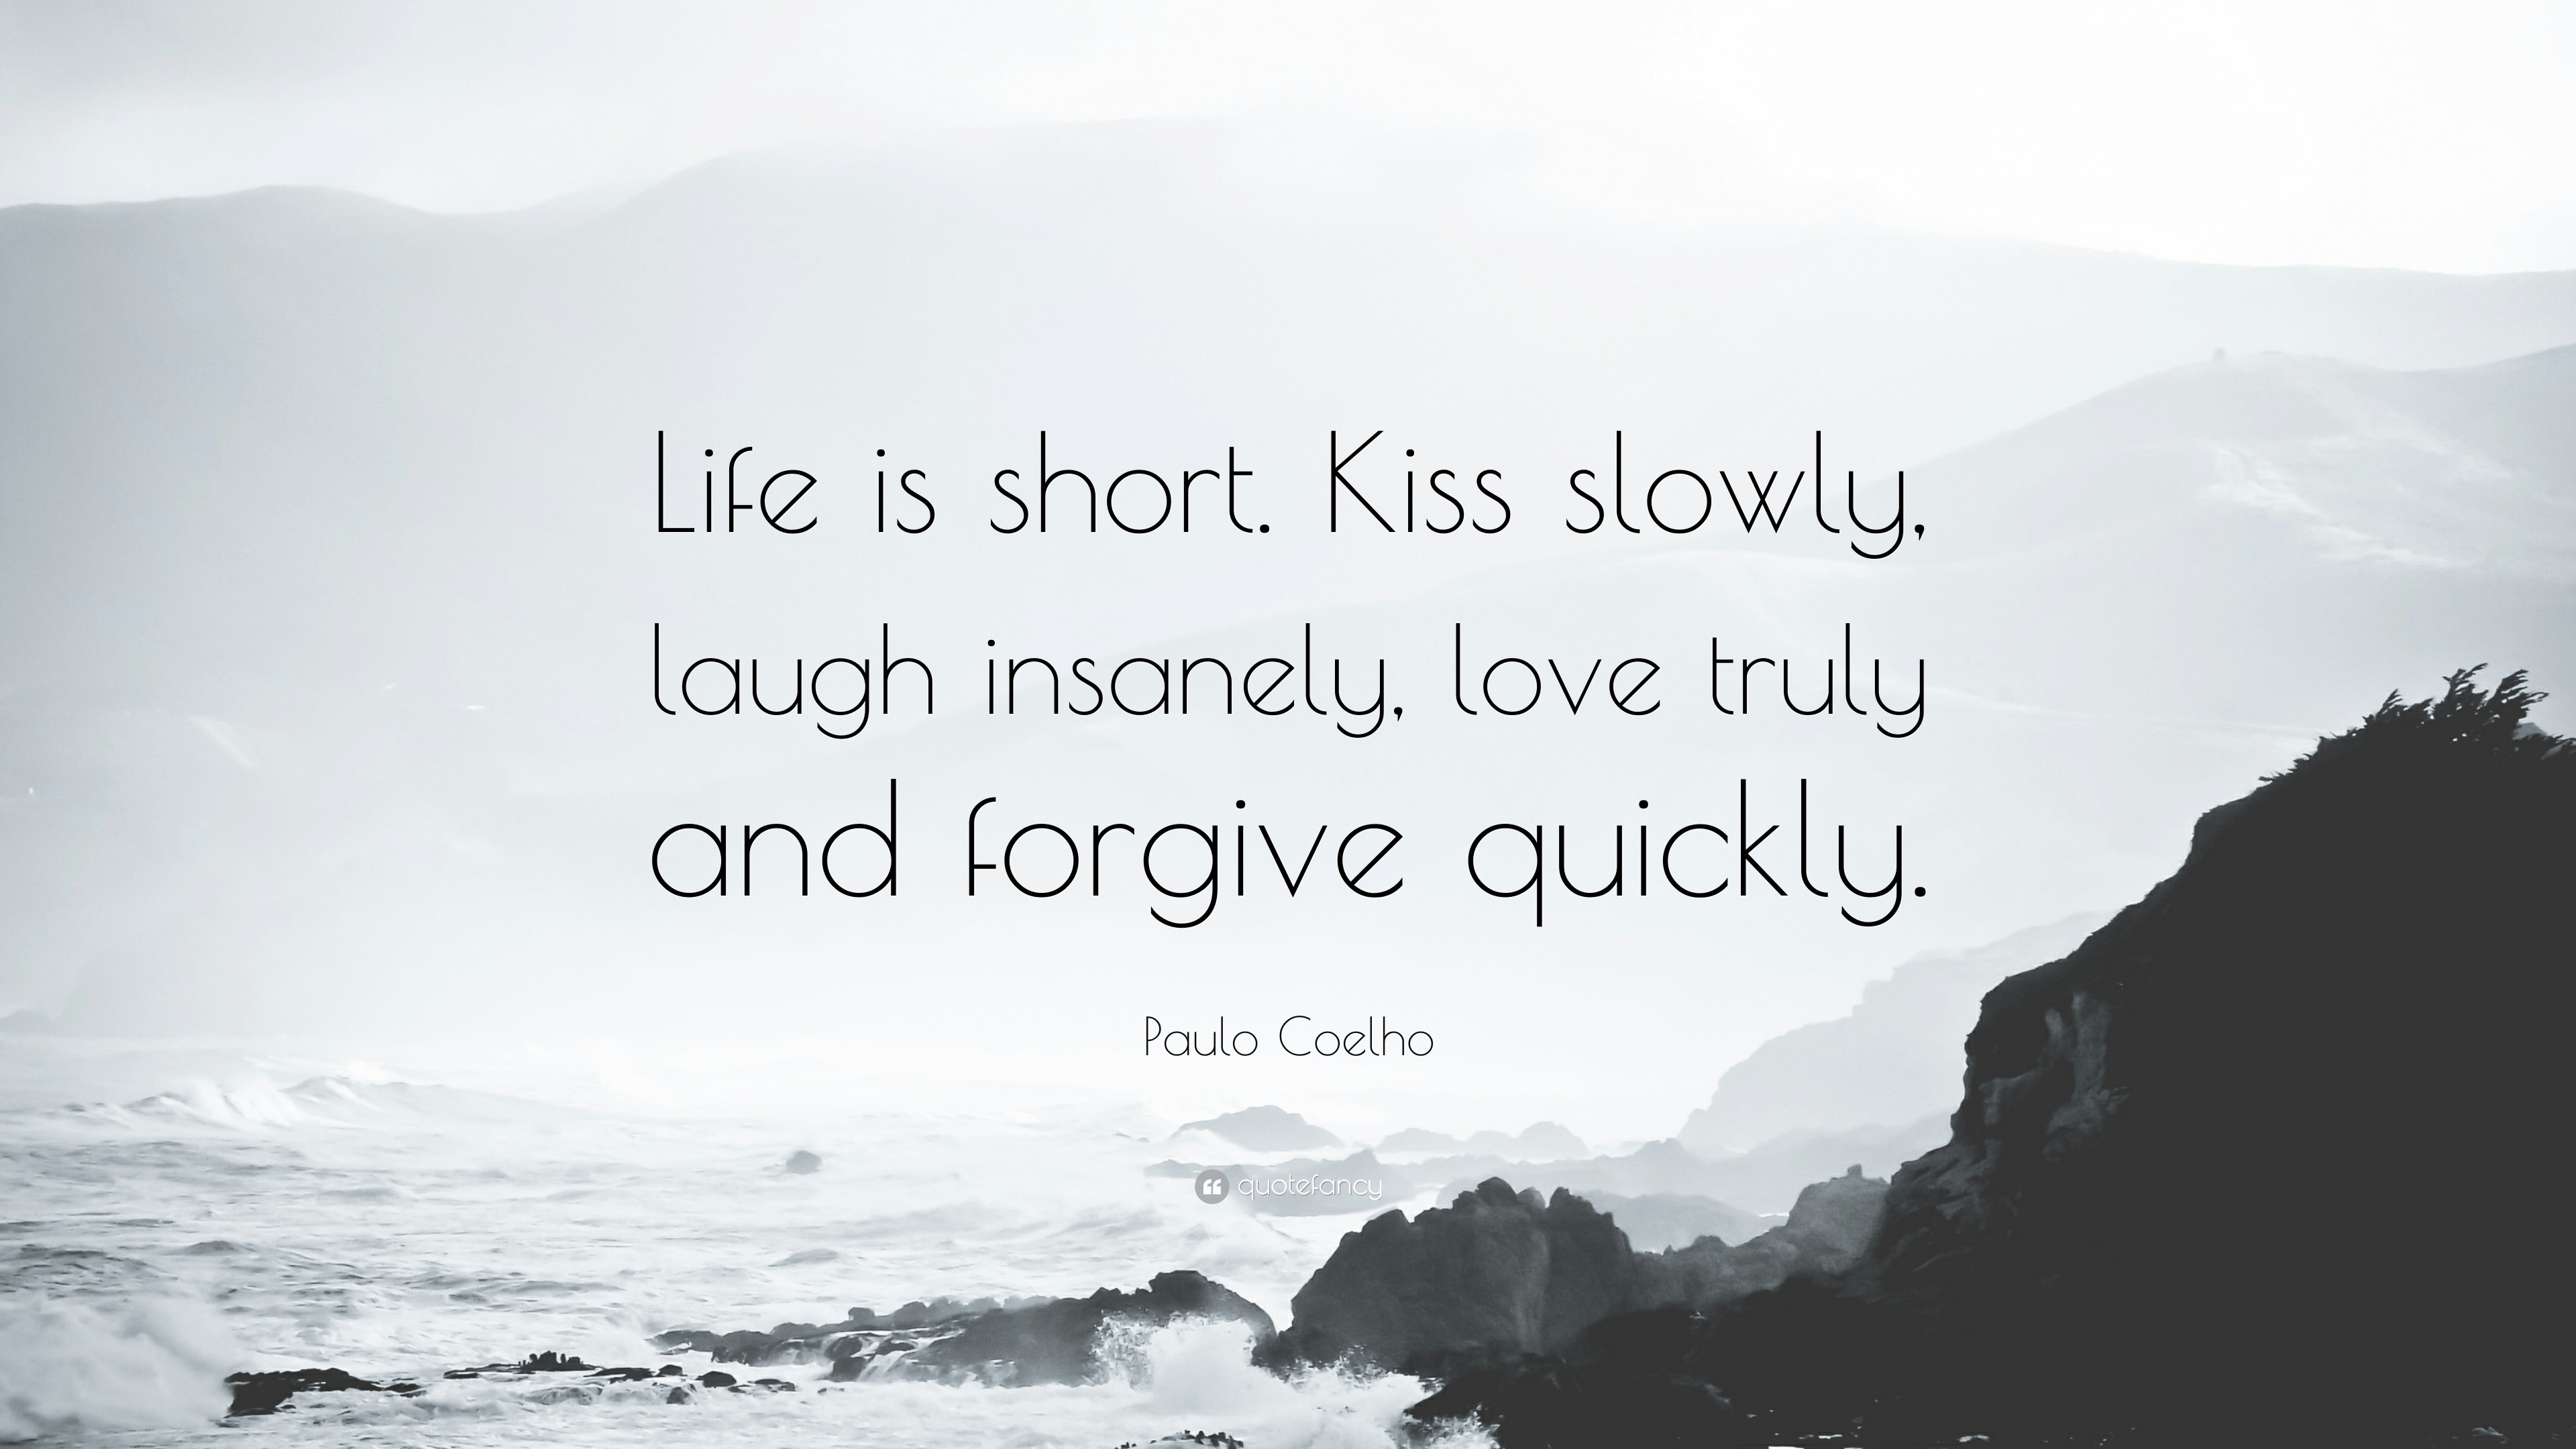 3840x2160 Paulo Coelho Quote: “Life is short. Kiss slowly, laugh insanely, love